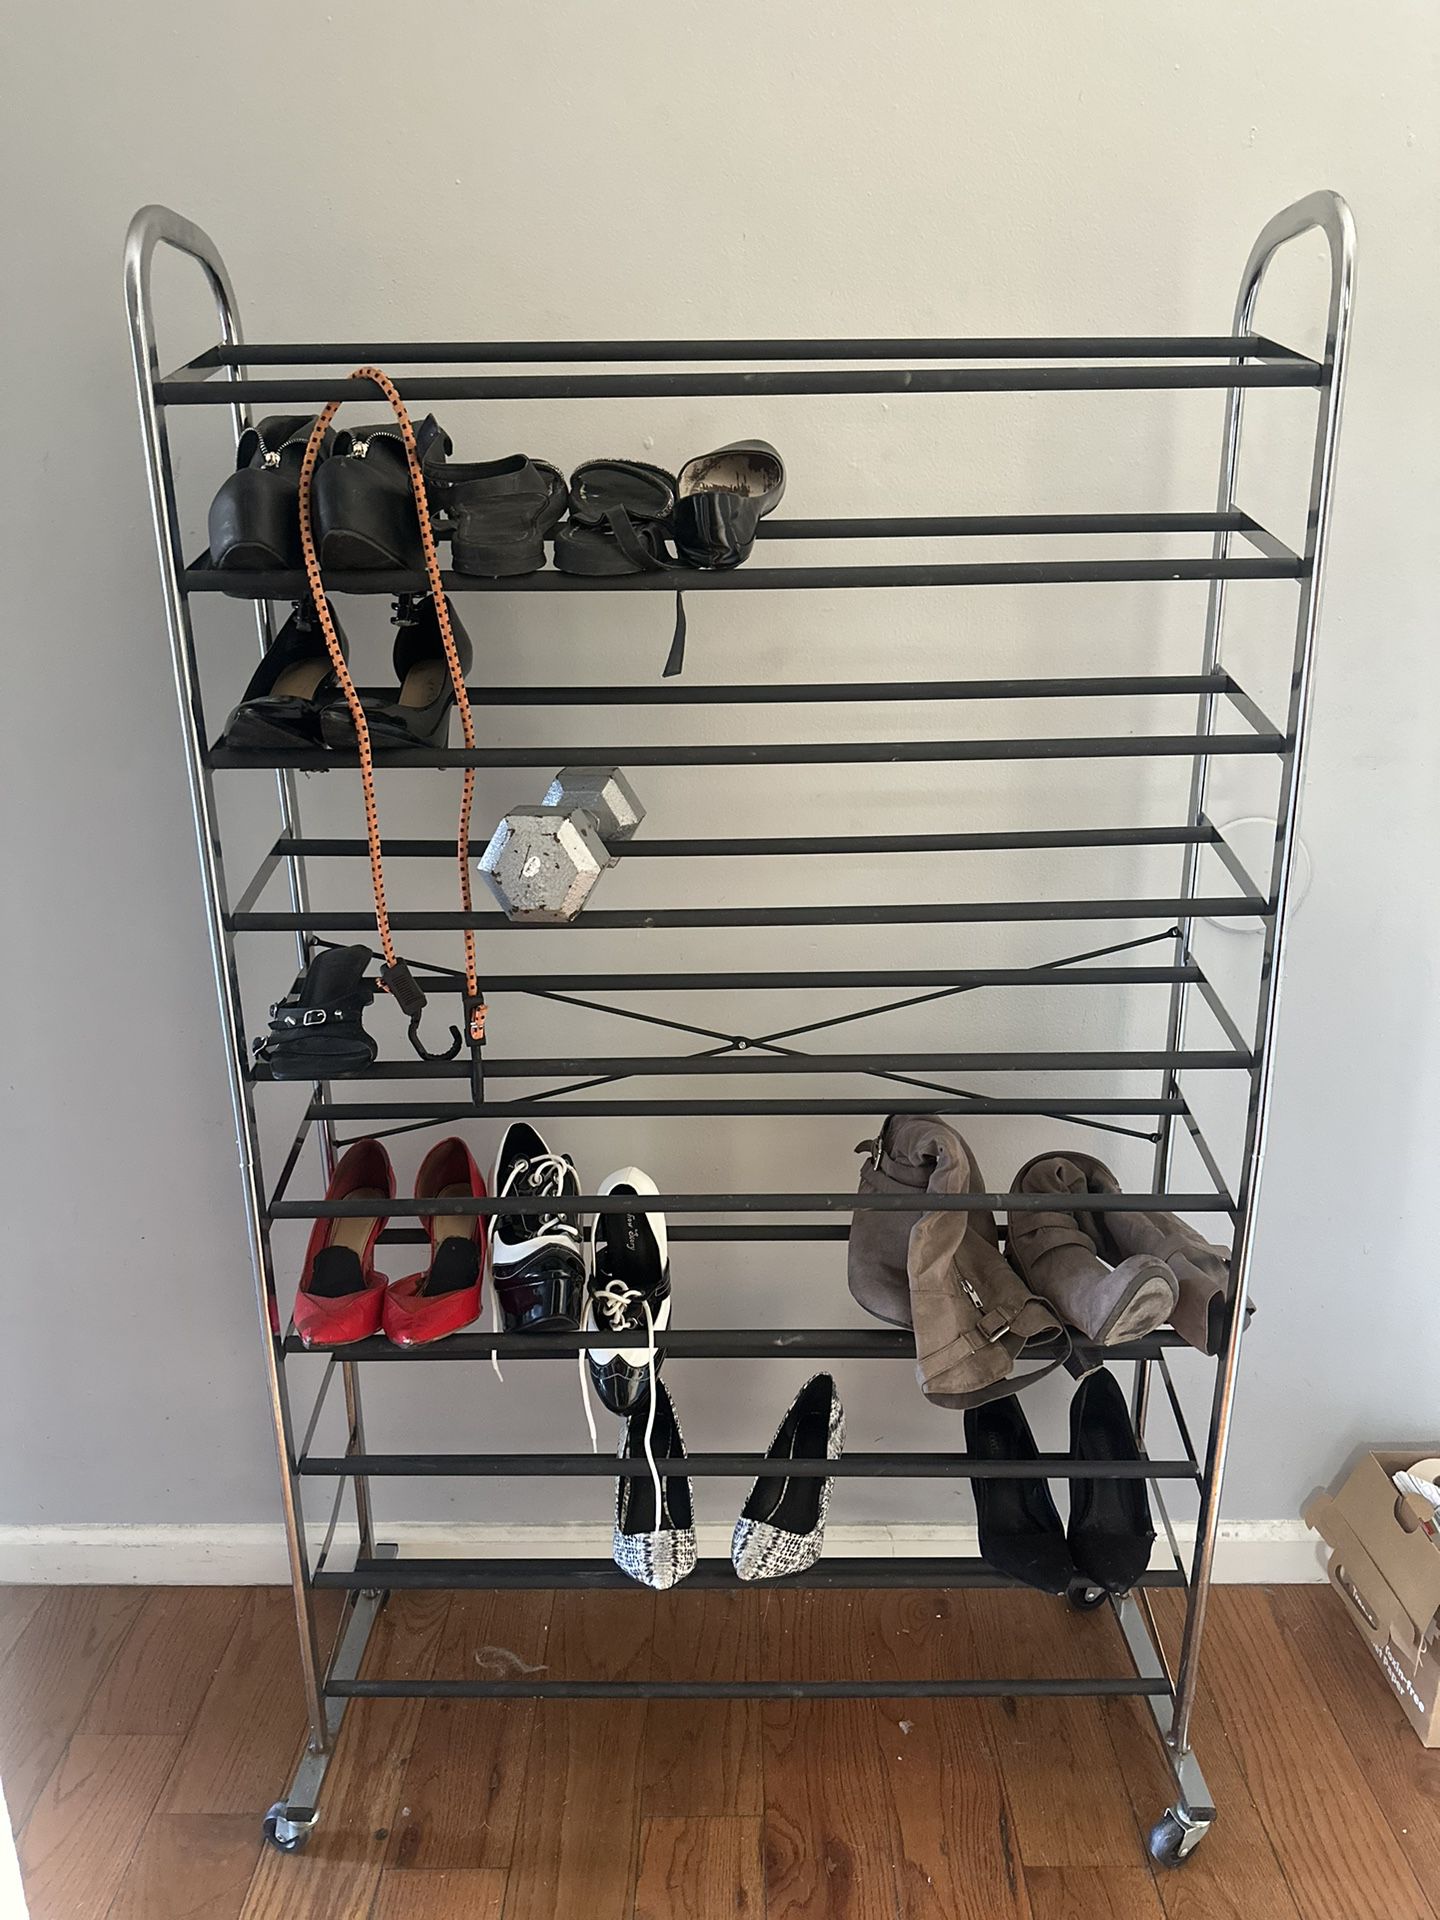 Killer shoe rack can fit 80 Pairs of heels